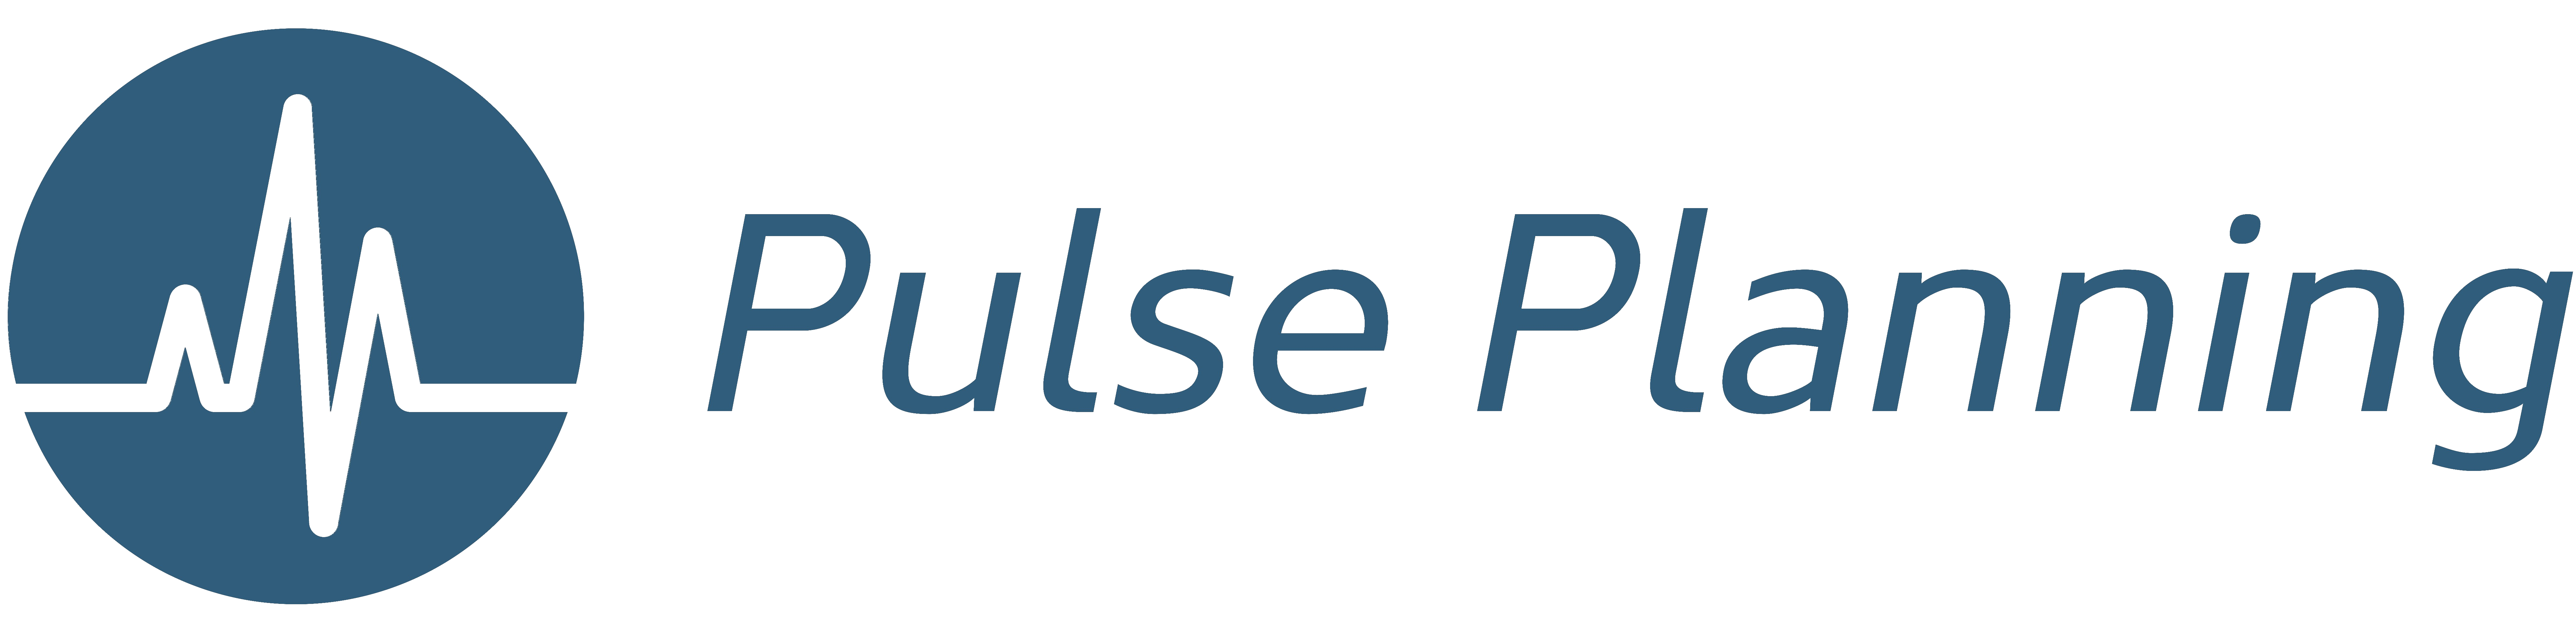 Pulse Planning logo